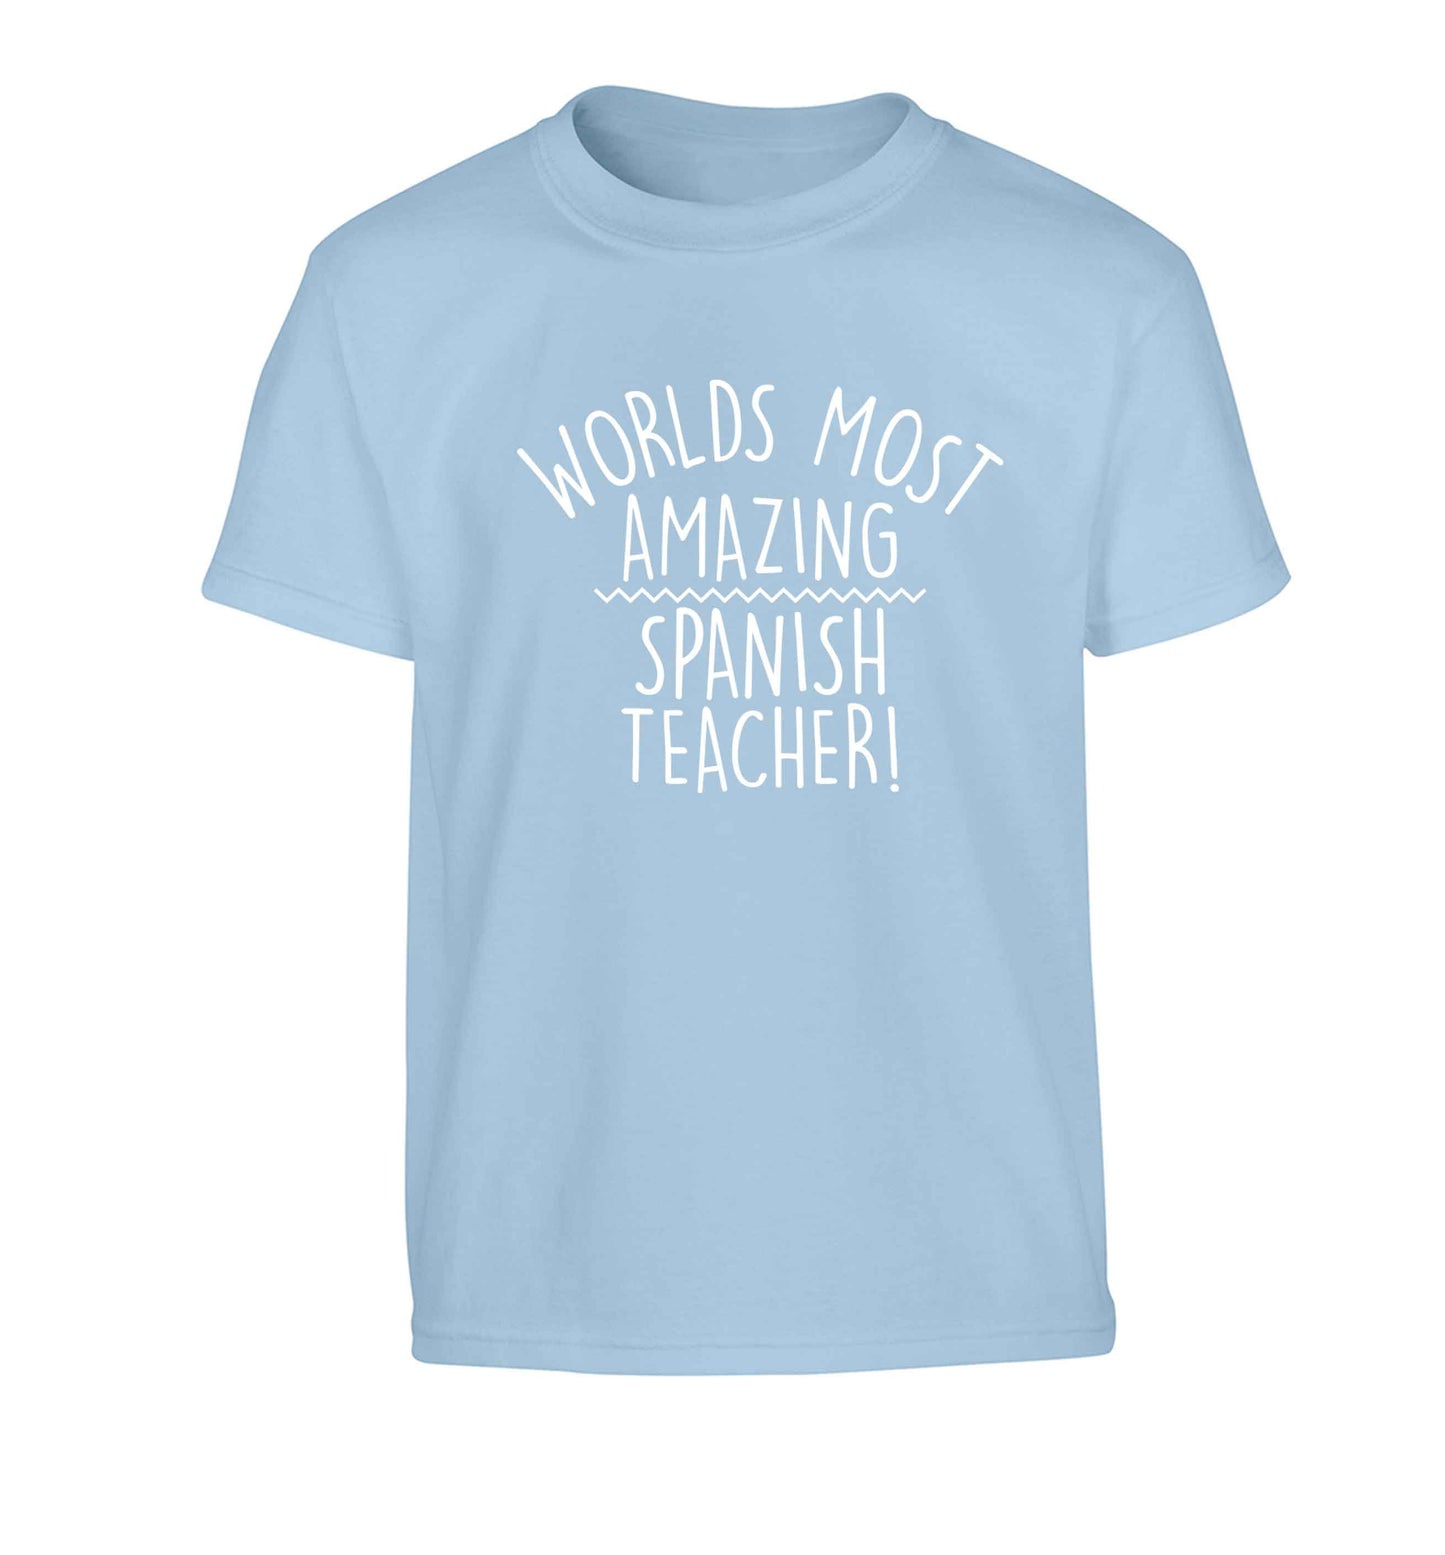 Worlds most amazing Spanish teacher Children's light blue Tshirt 12-13 Years